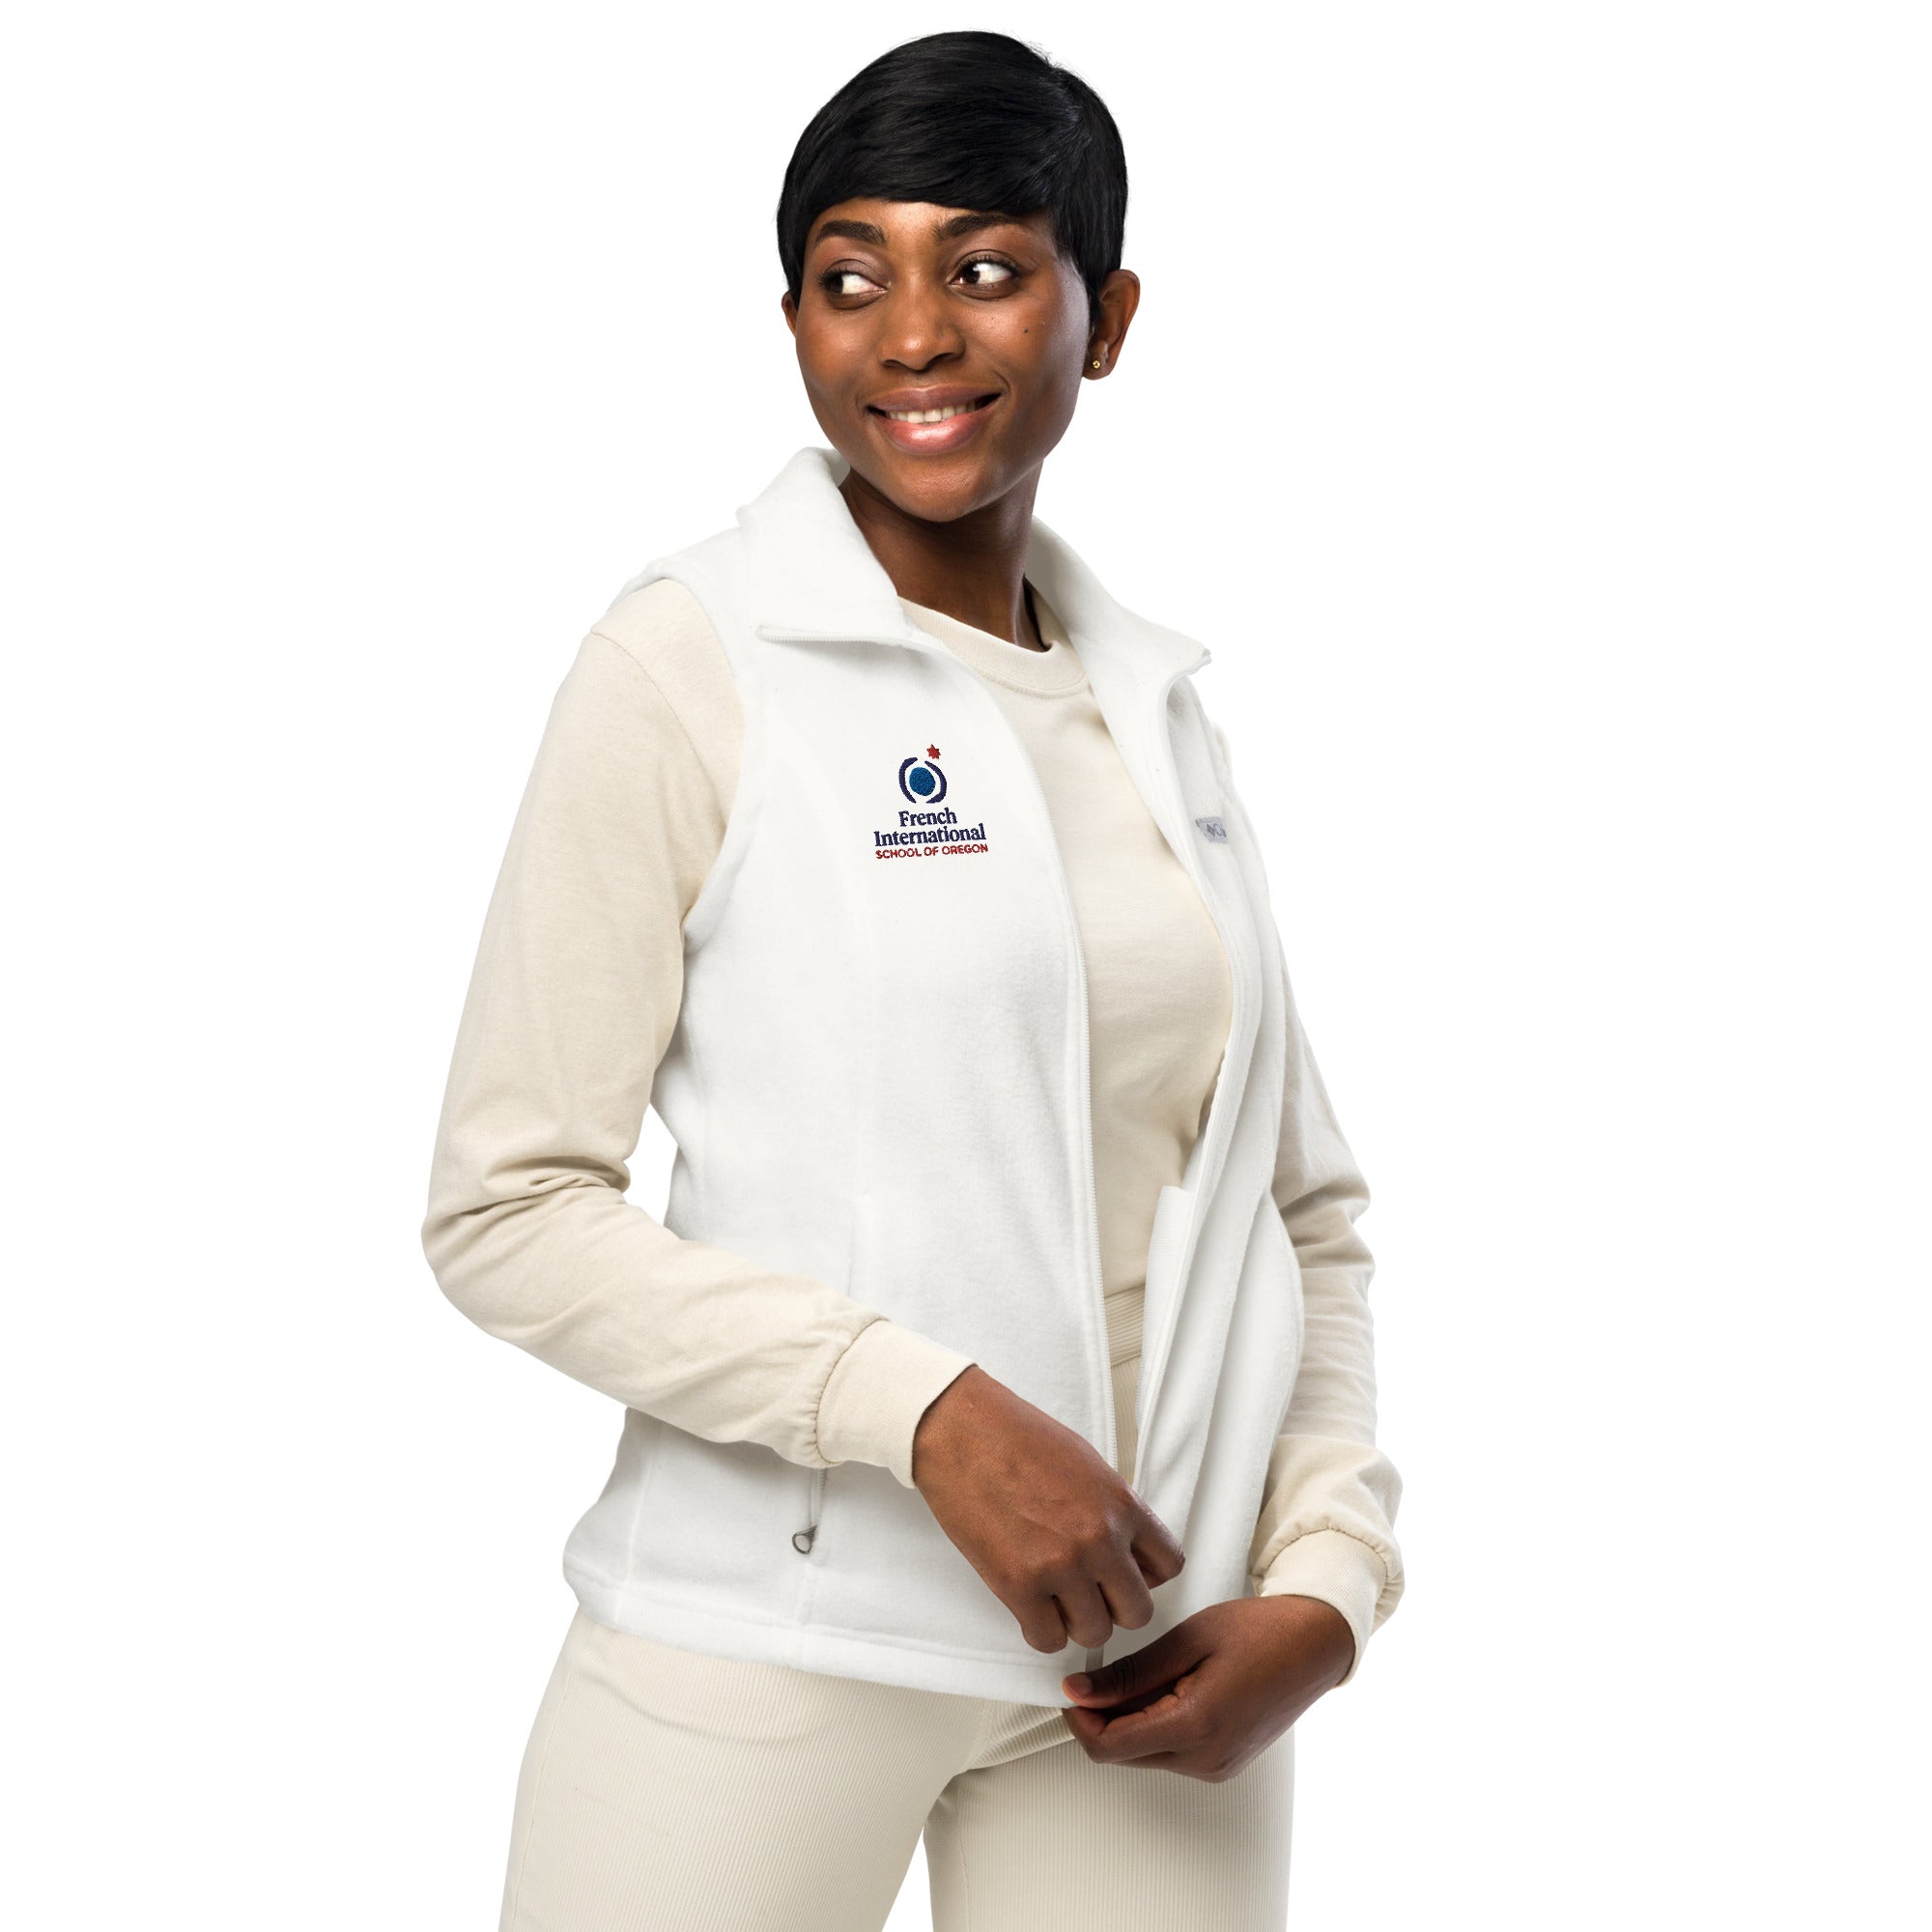 FI - Women's Columbia Fleece Vest - White – French International